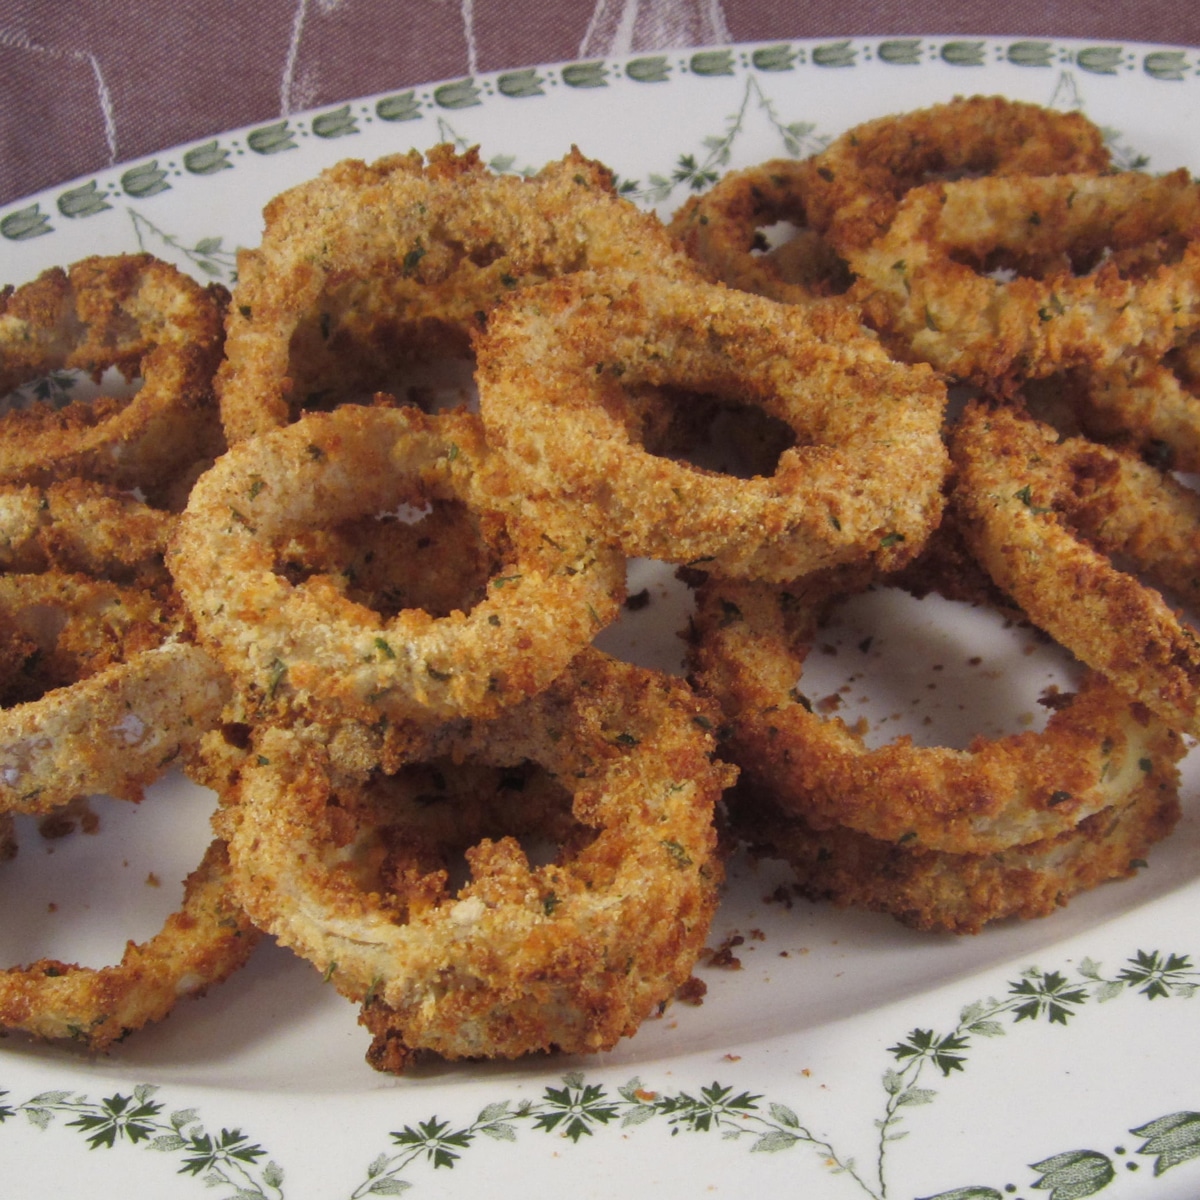 Air-fried onion rings